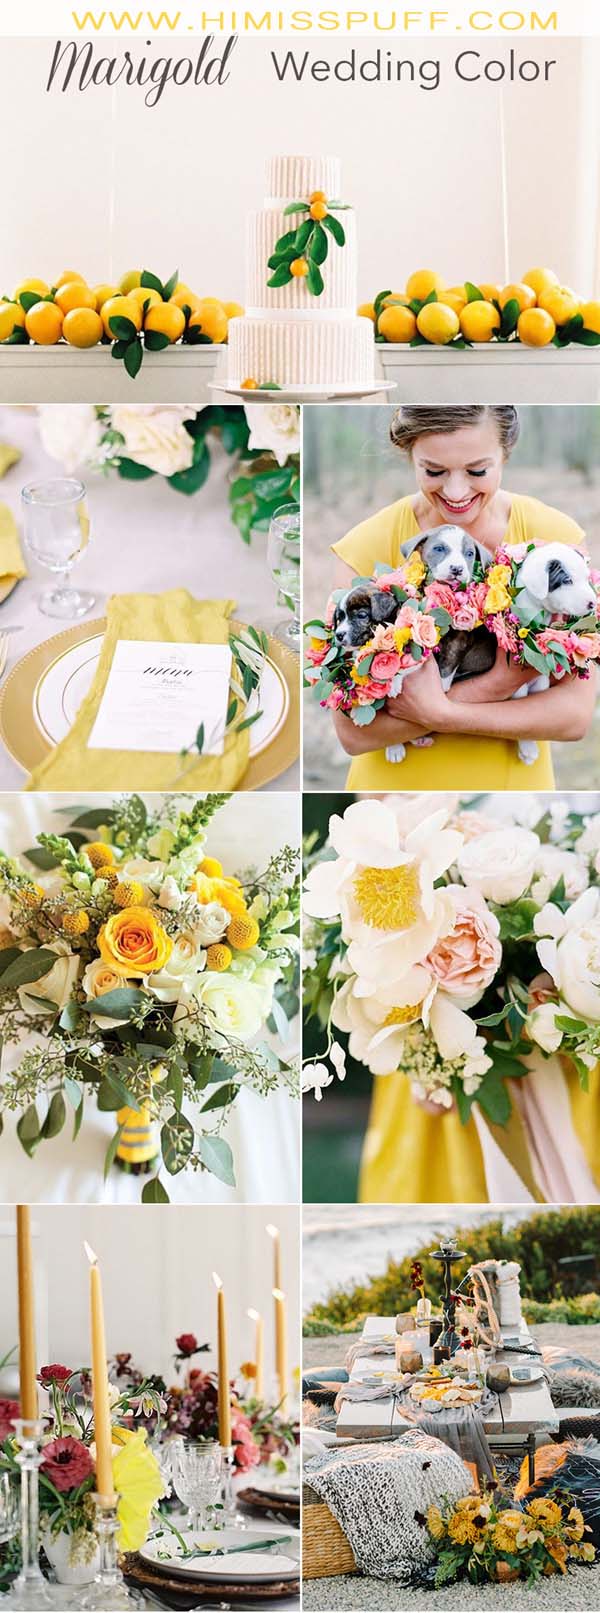 Marigold wedding theme with greenery wedding decorations